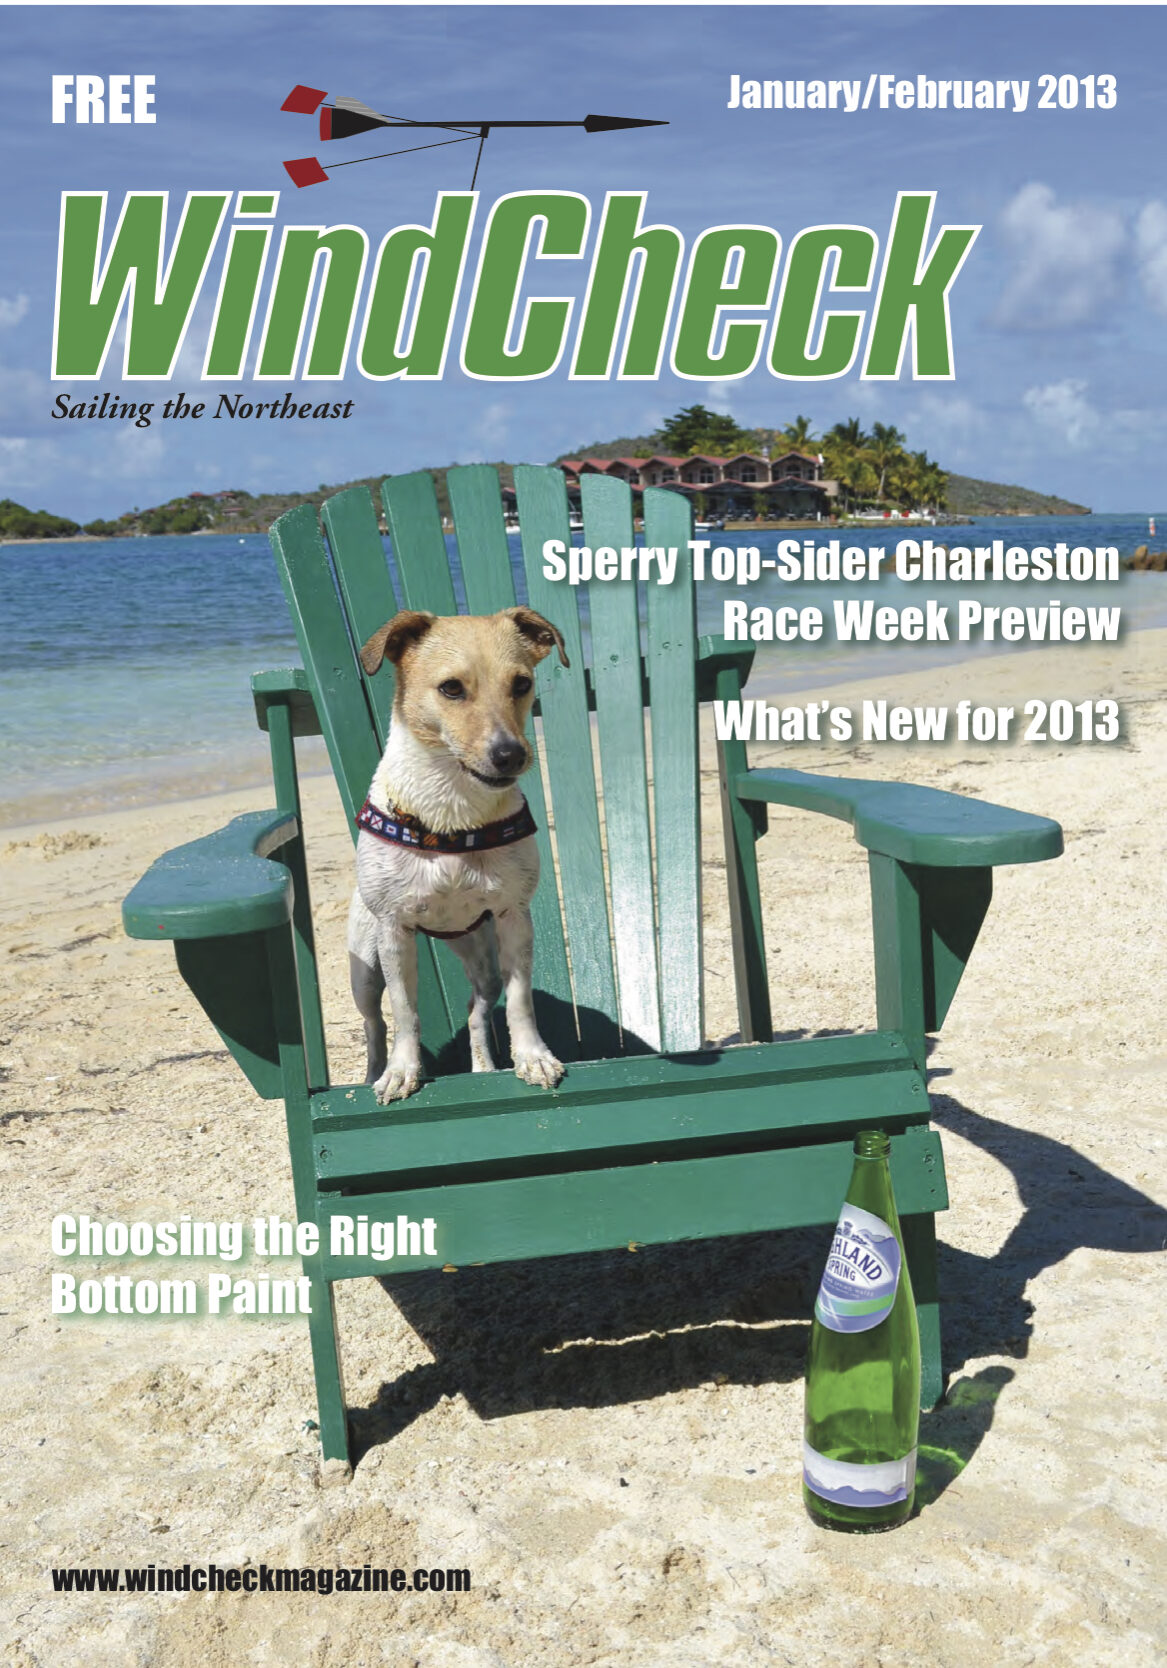 Windcheck Magazine - January/February 2013